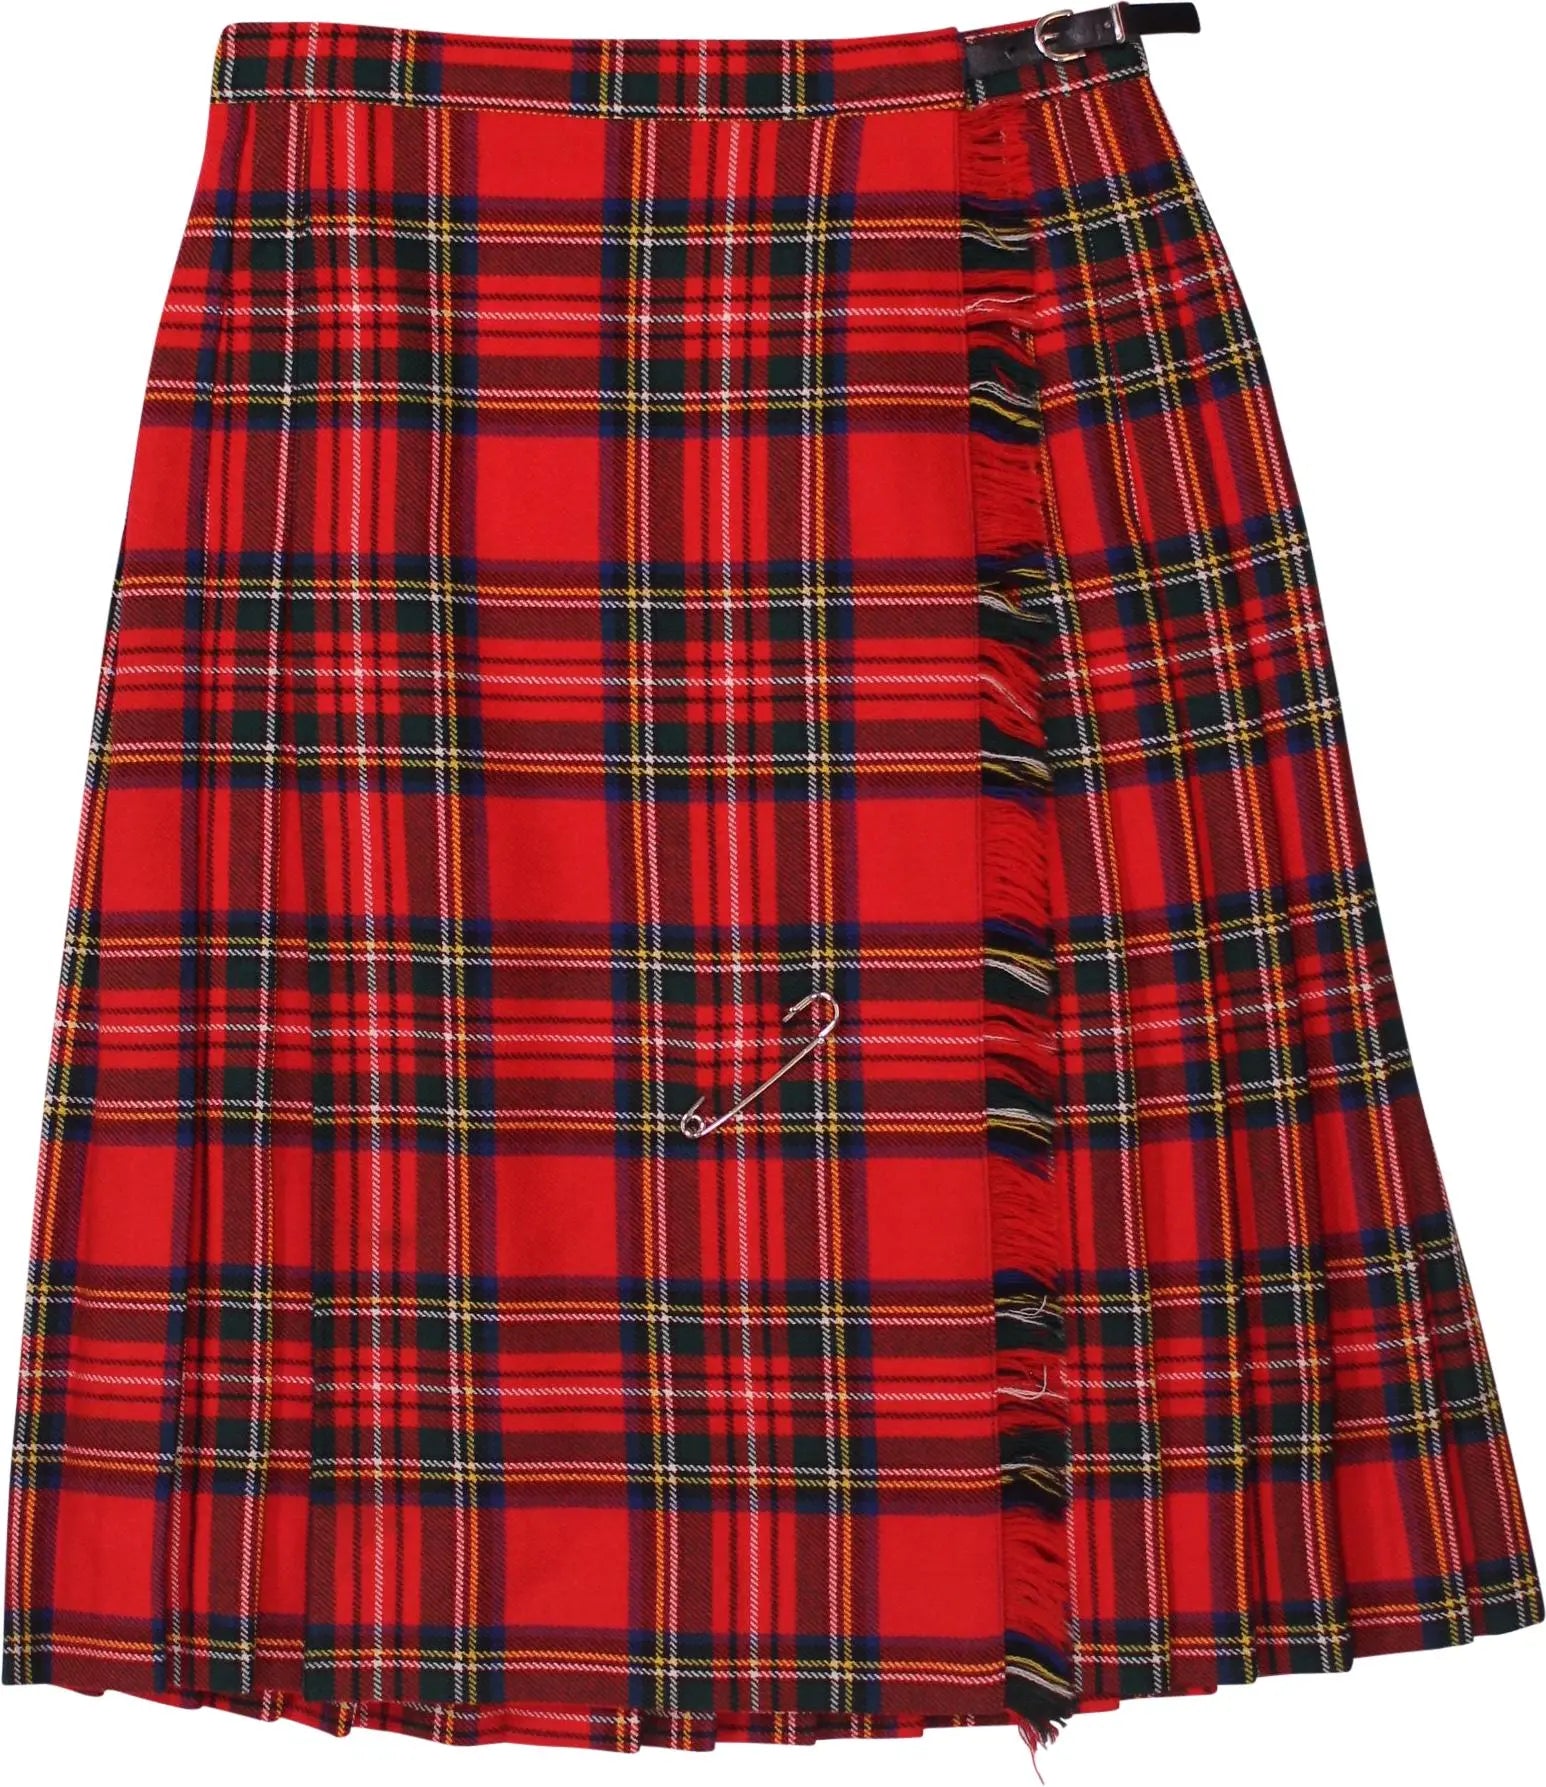 Huntingdom - Scottish Tartan Skirt- ThriftTale.com - Vintage and second handclothing